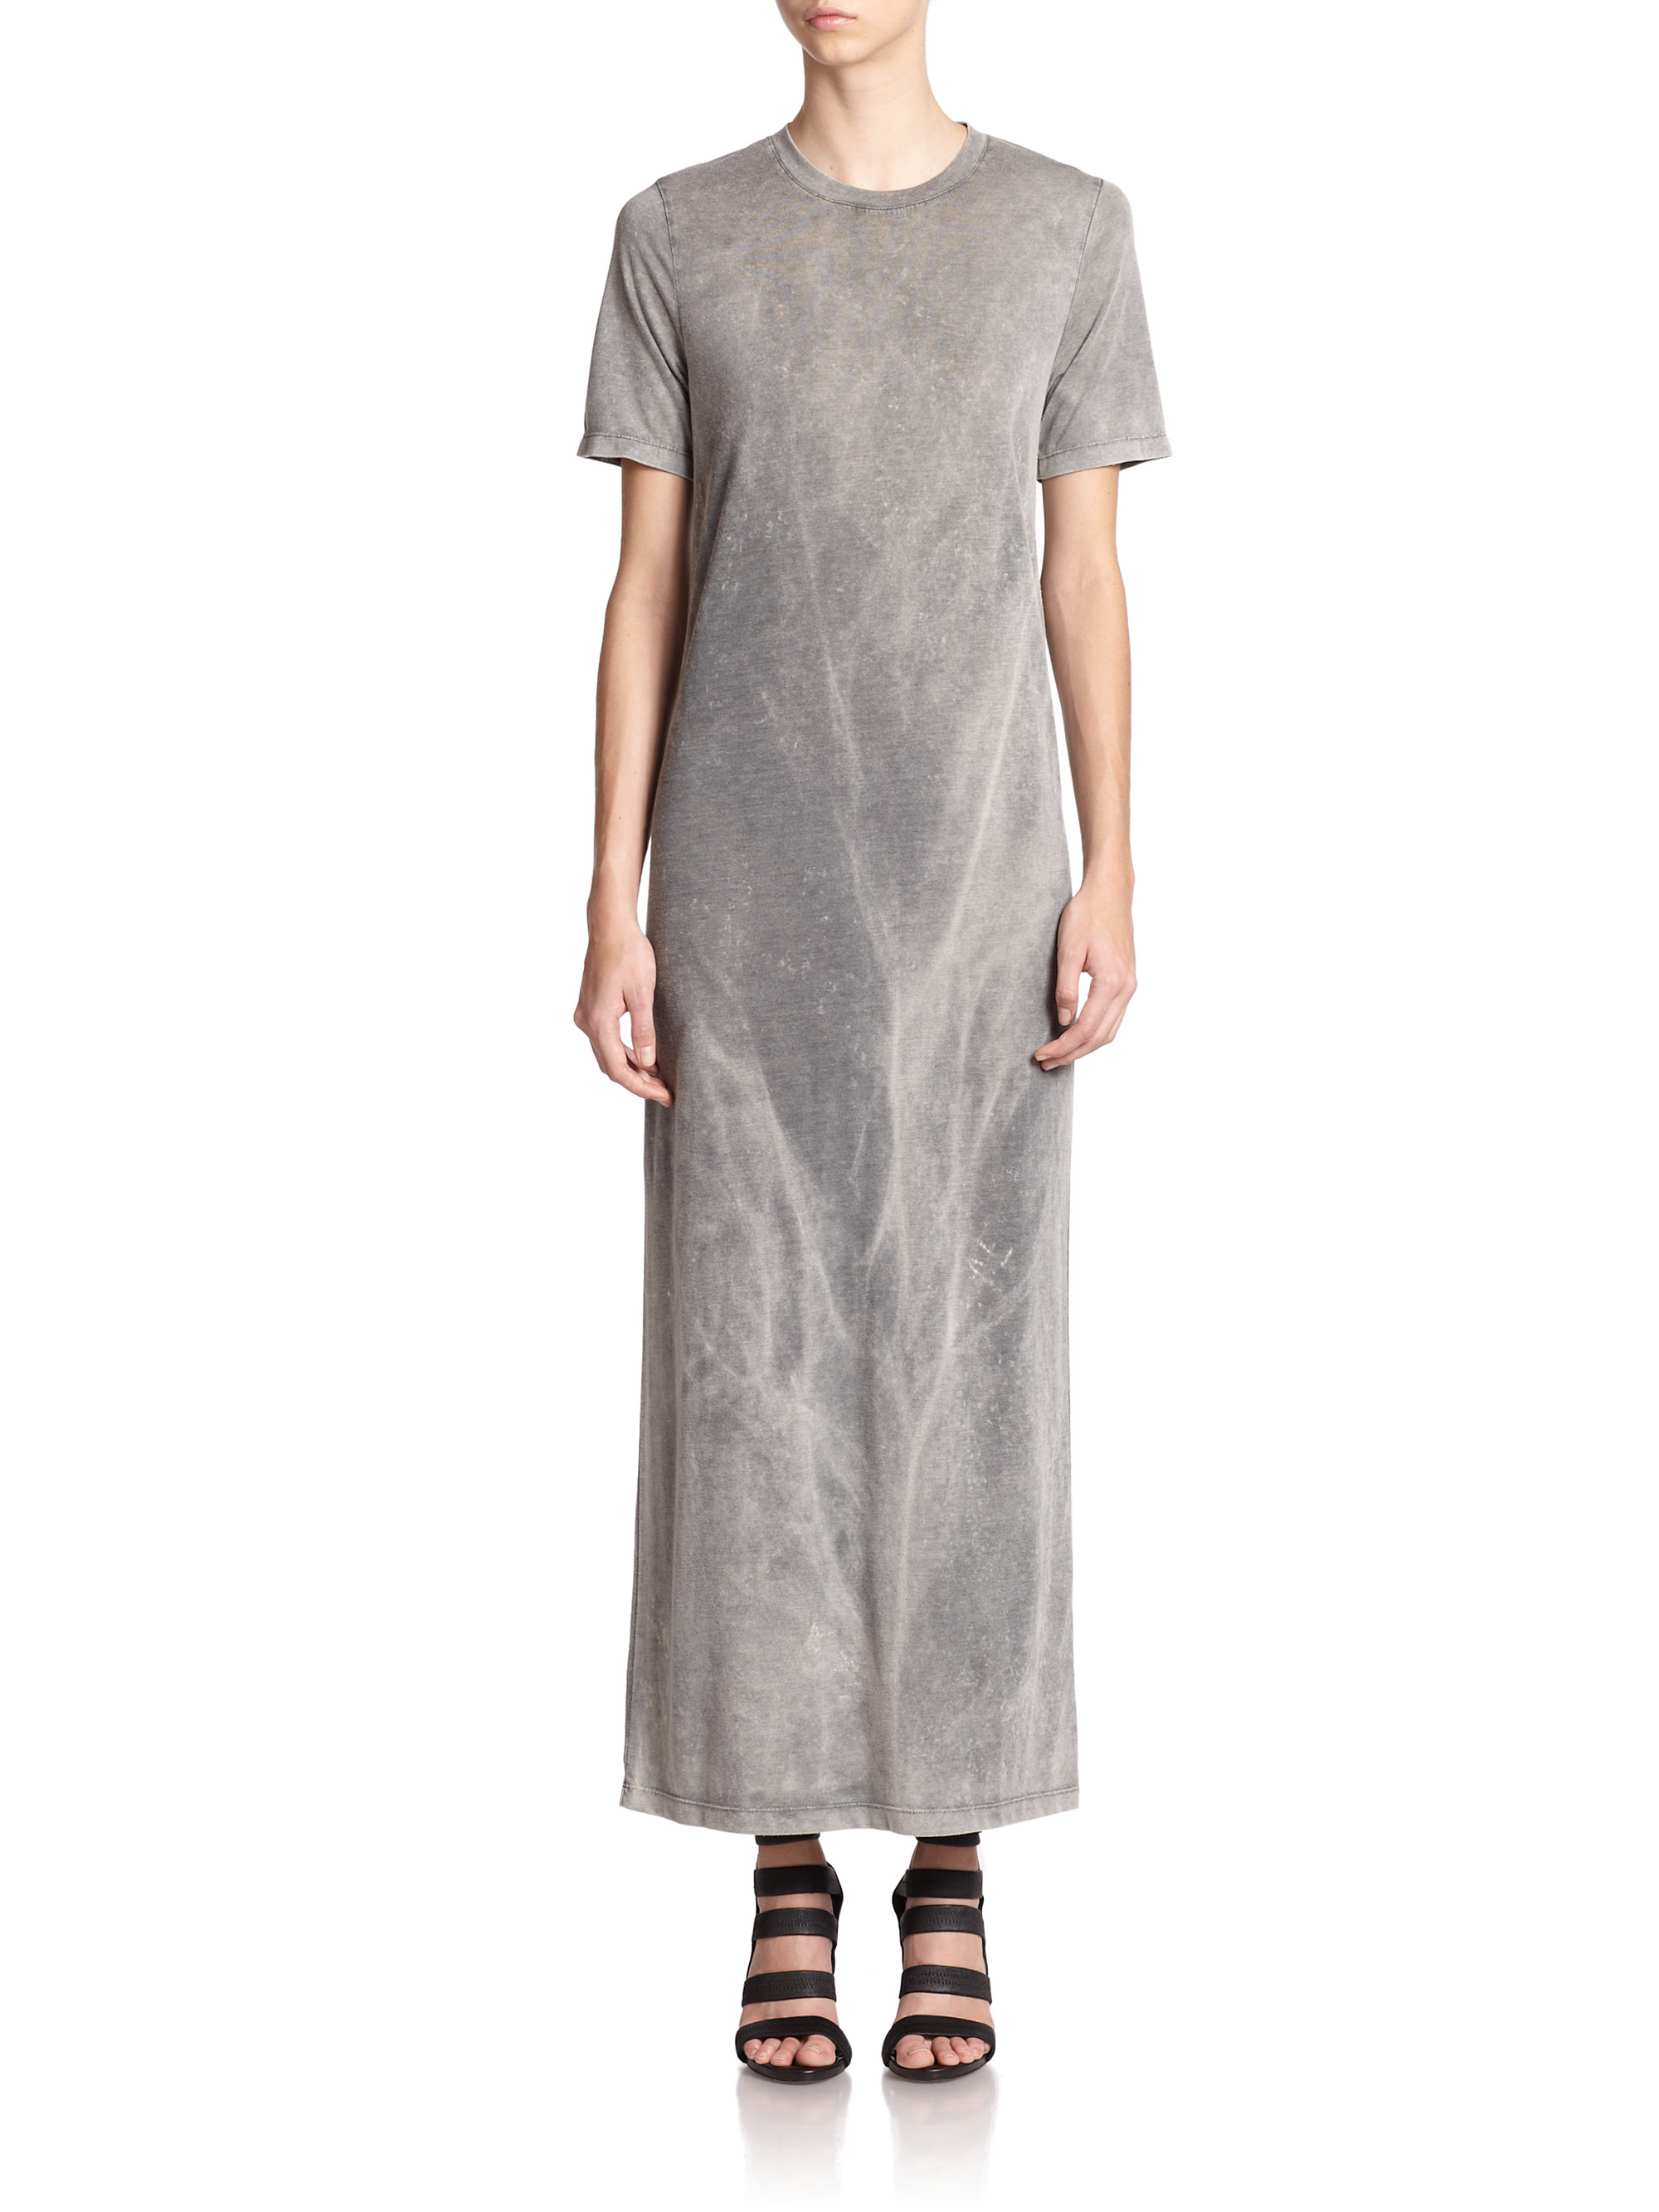 IRO Gaye T-shirt Dress in Dark Grey (Gray) - Lyst